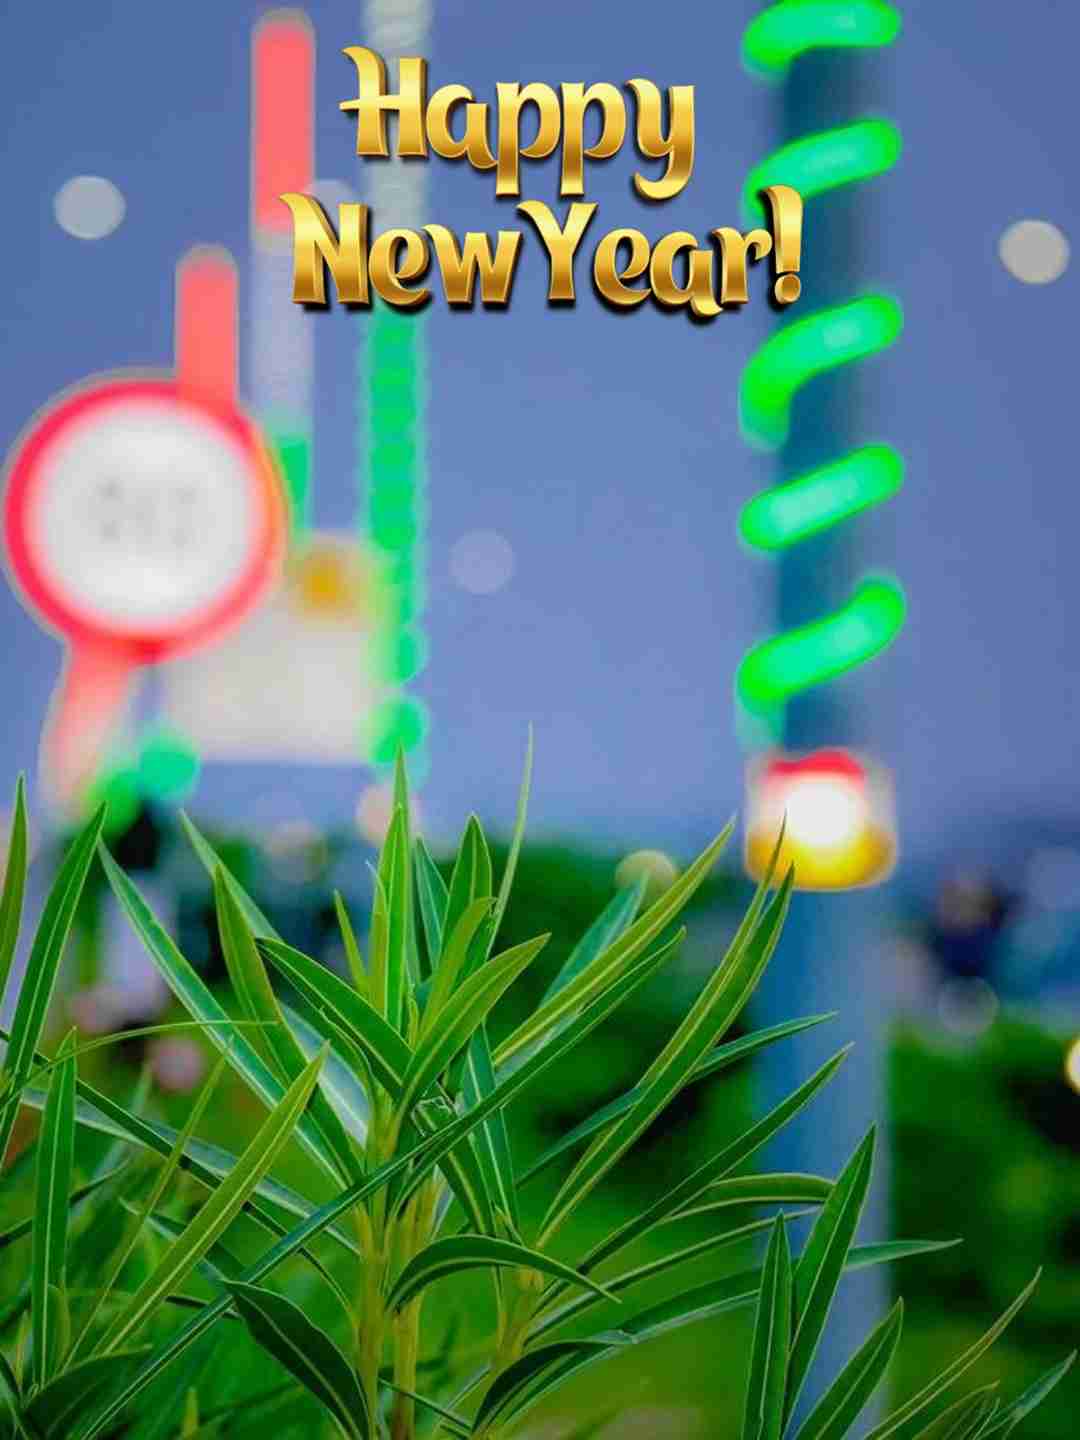 Beautiful Happy New Year CB Background Image